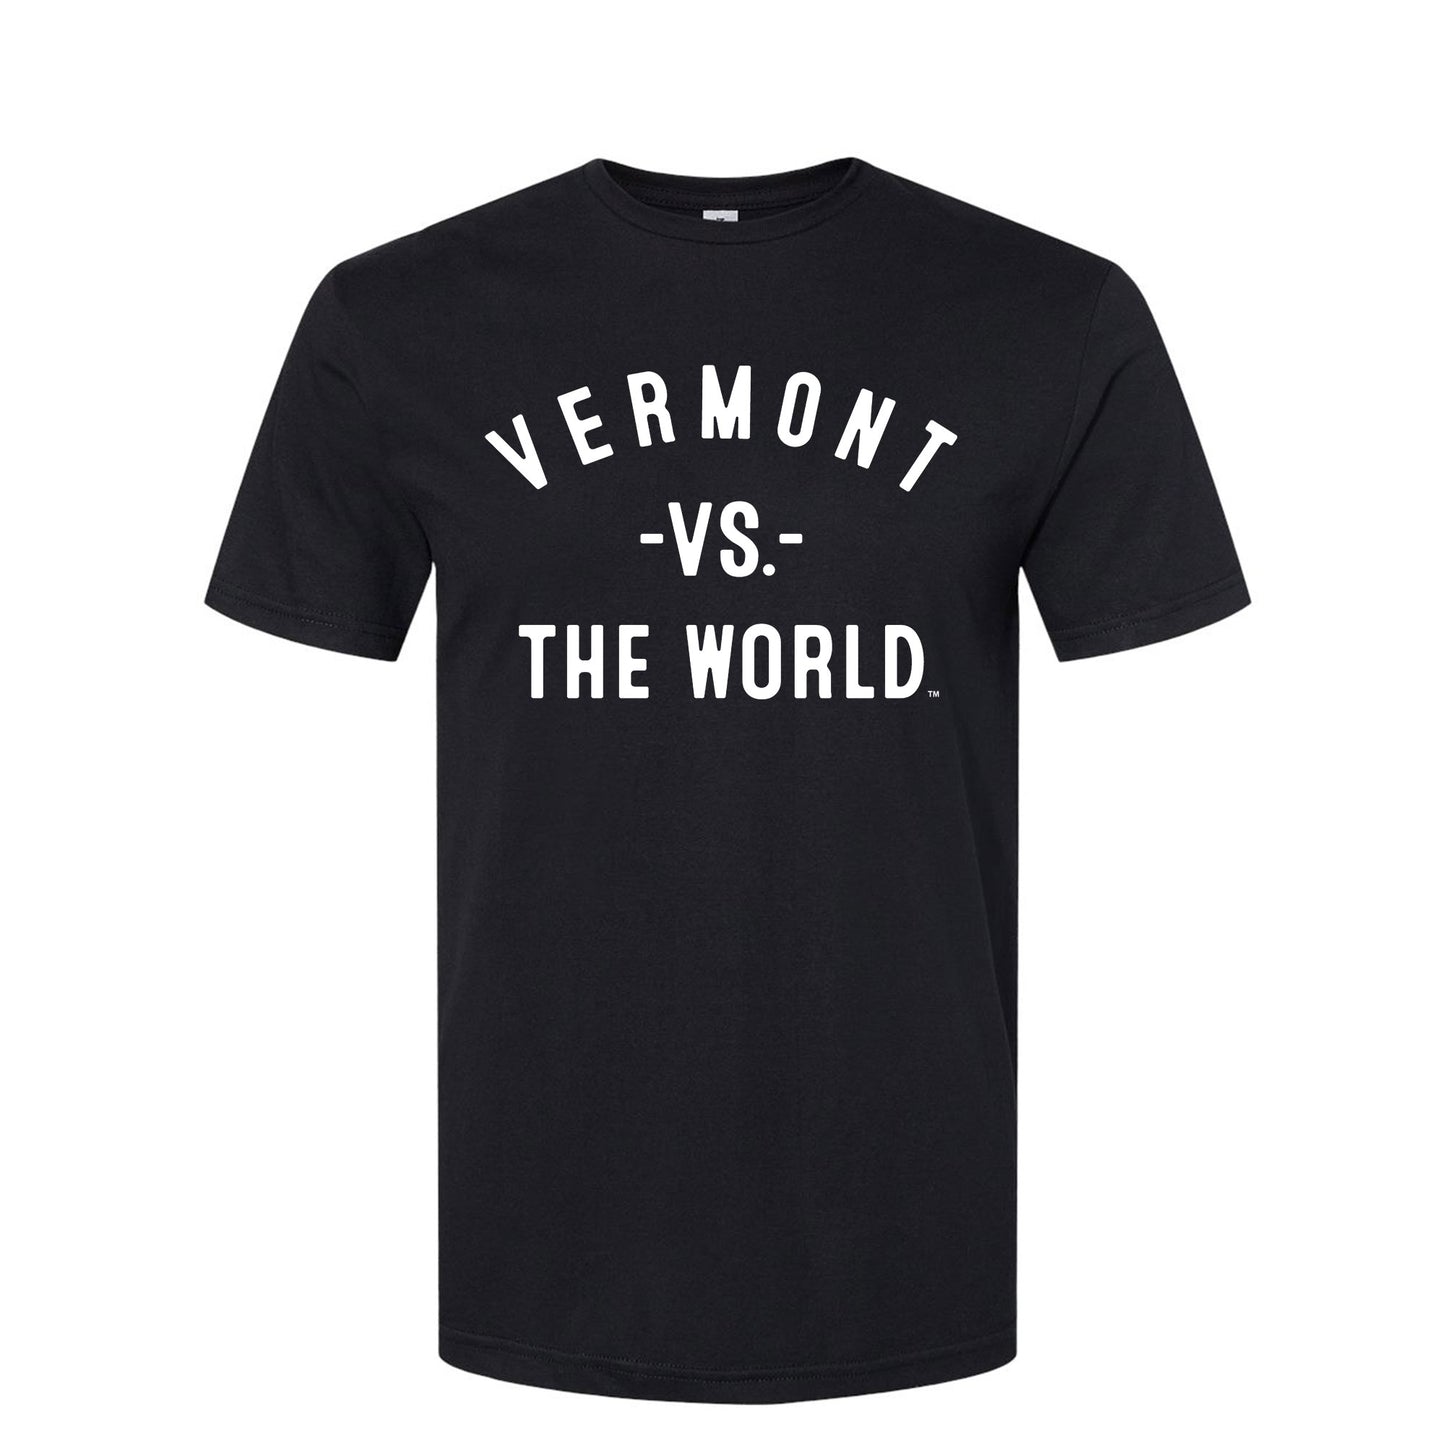 VERMONT Vs The World Unisex T-shirt